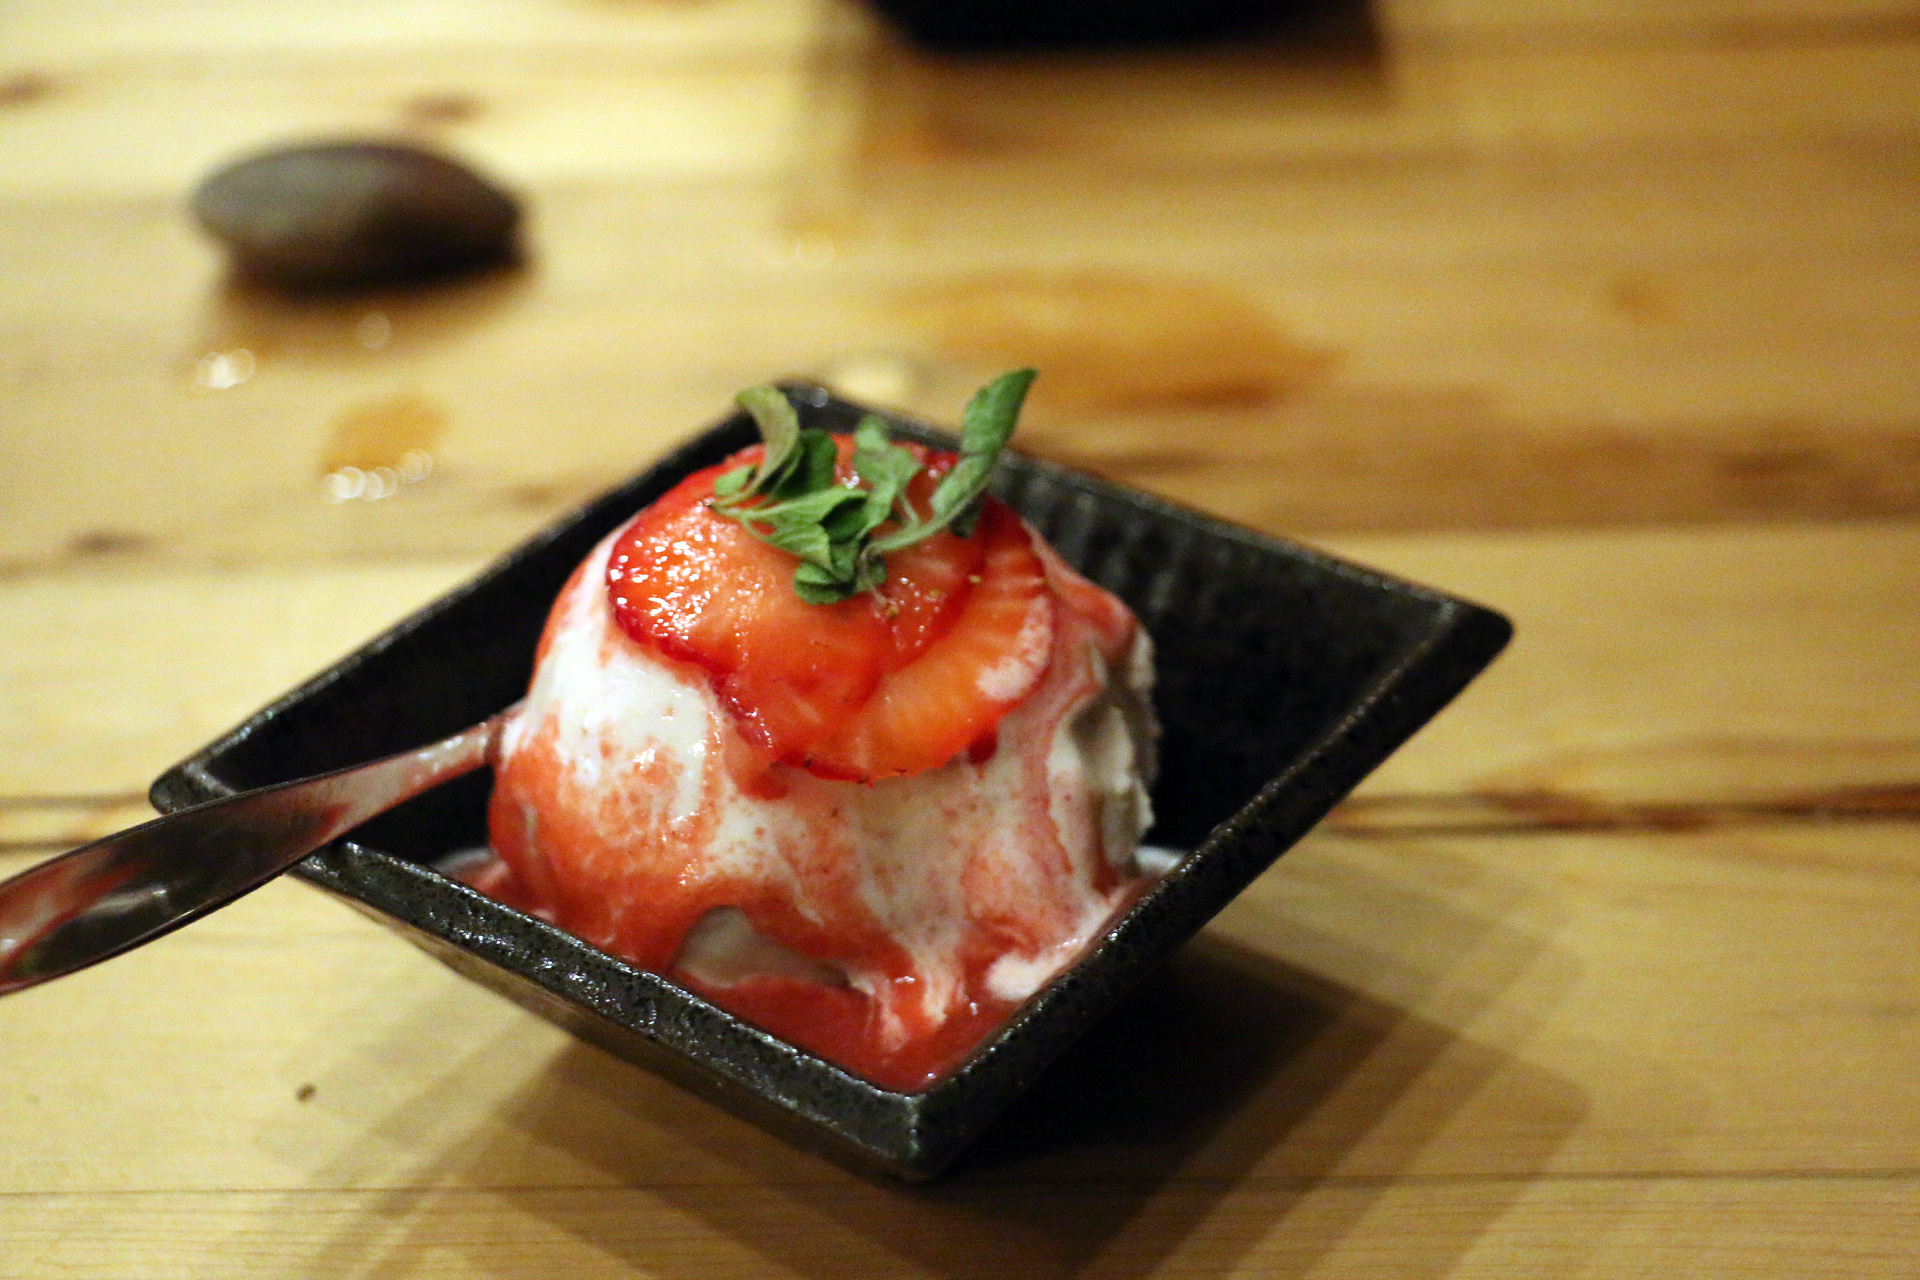 Homemade strawberry ice cream for dessert.